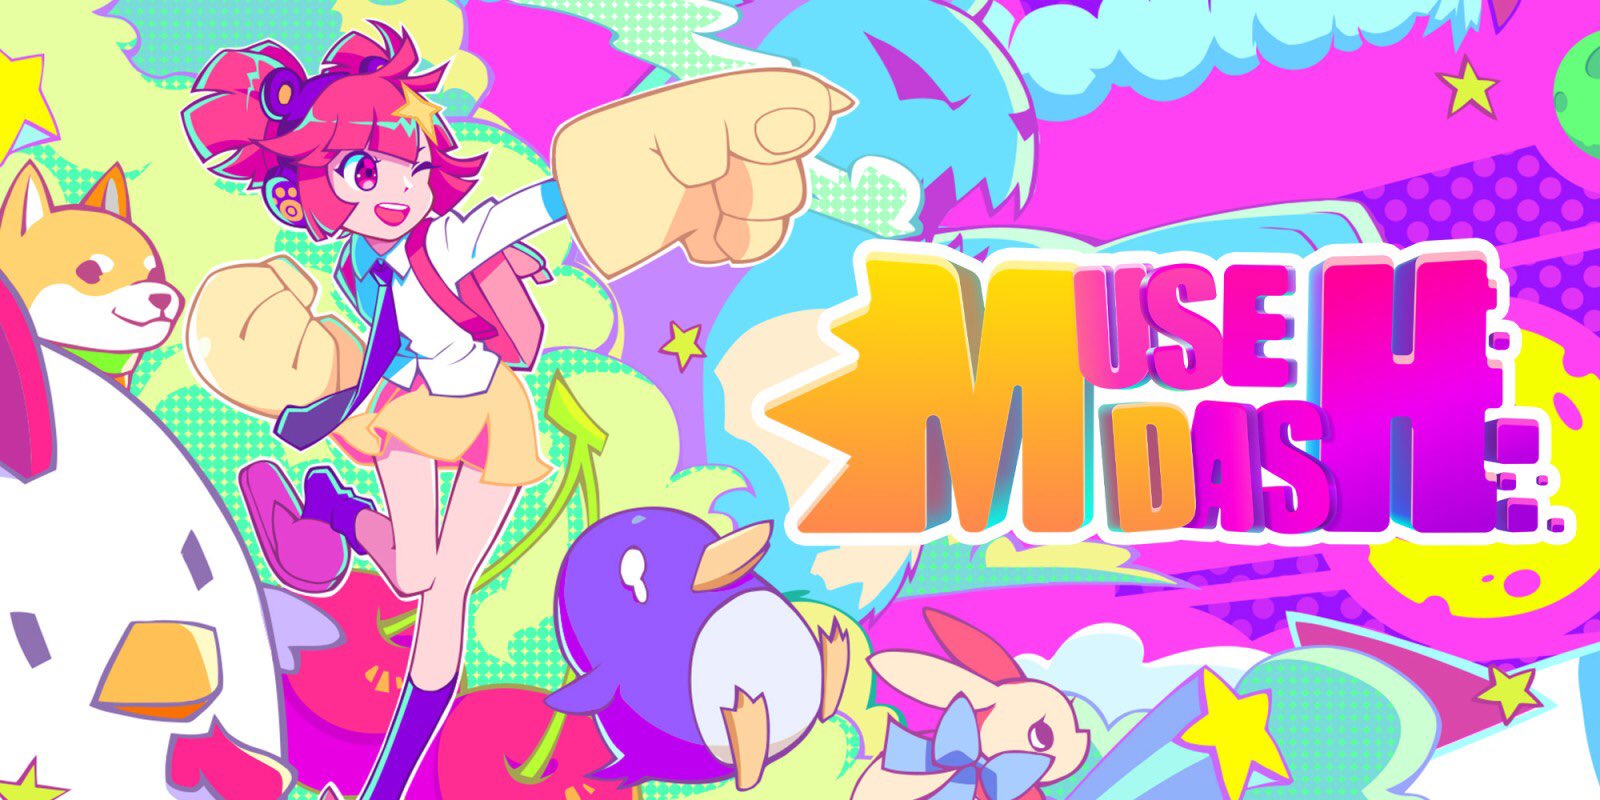 Muse Dash - MiniReview